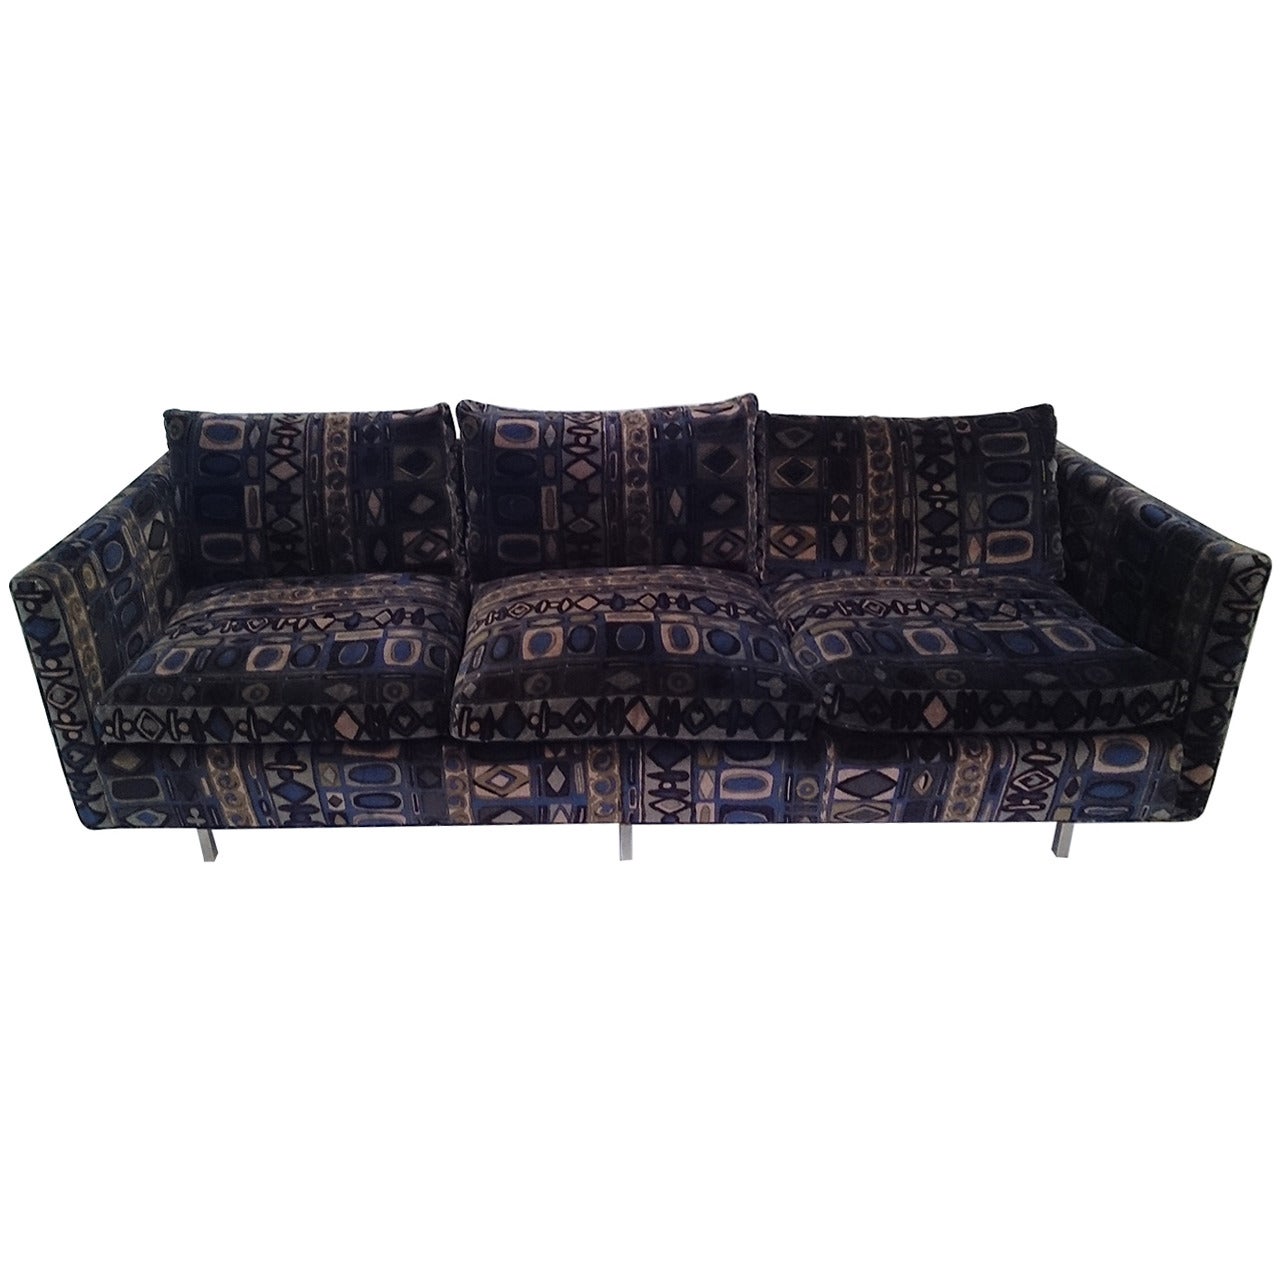 Milo Baughman Sofa With Original Jack Lenor Larsen Fabric For Sale